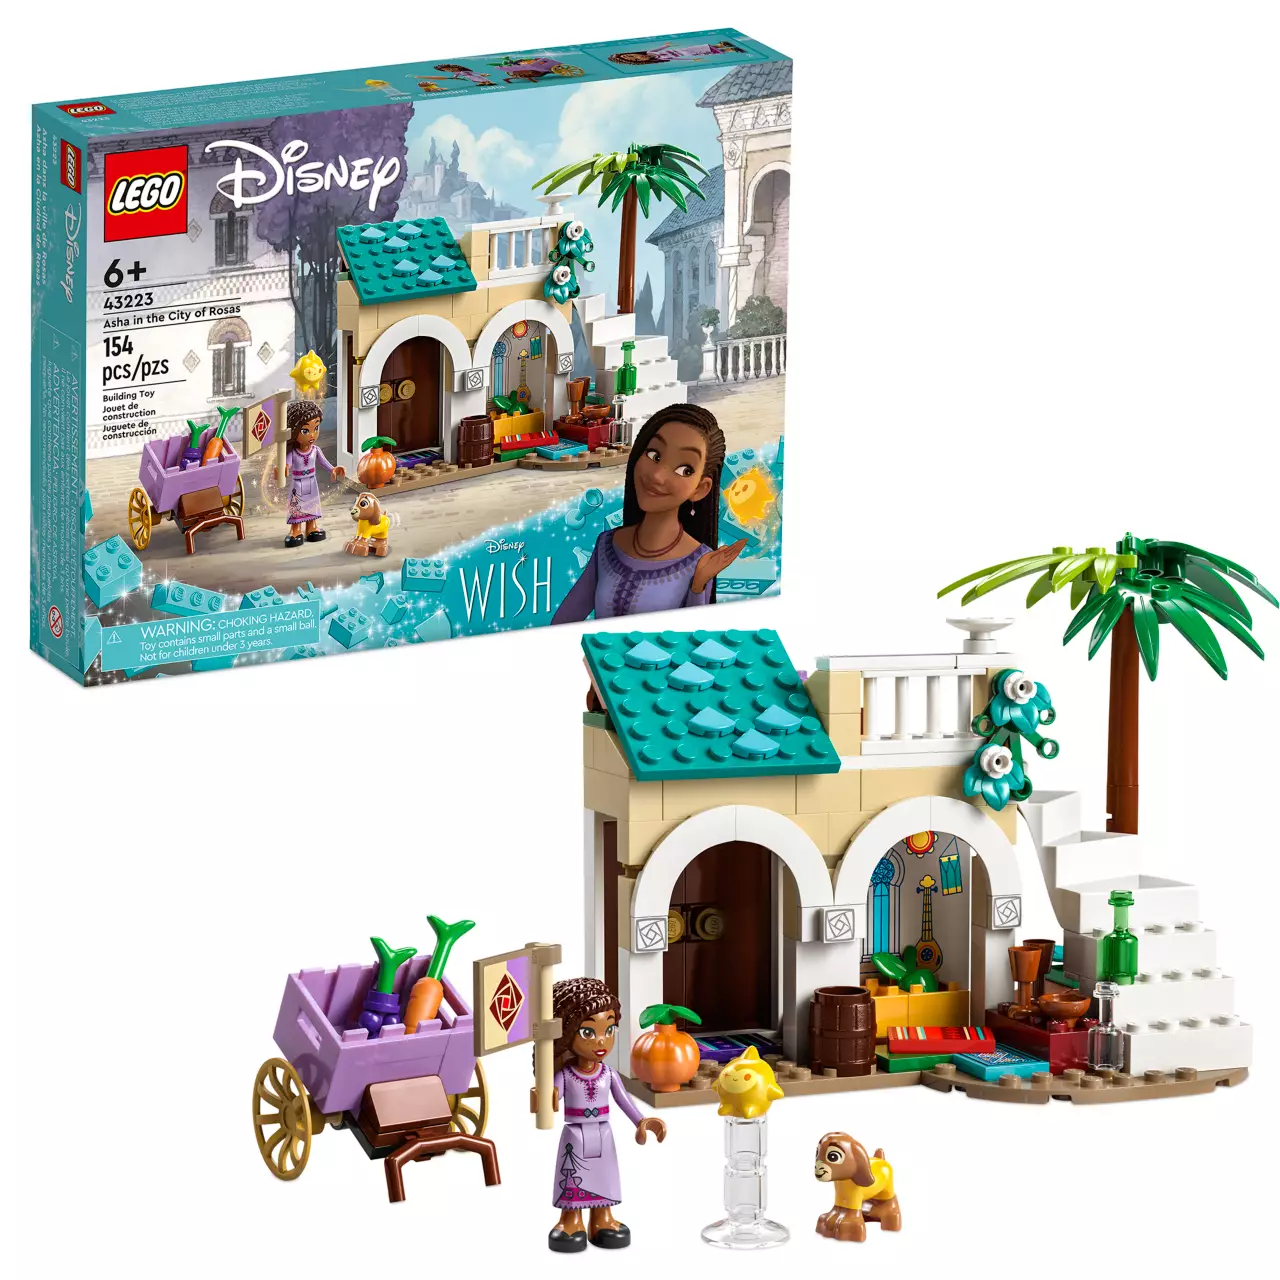 Disney's Wish LEGO Asha in the City of Rosas – 43223